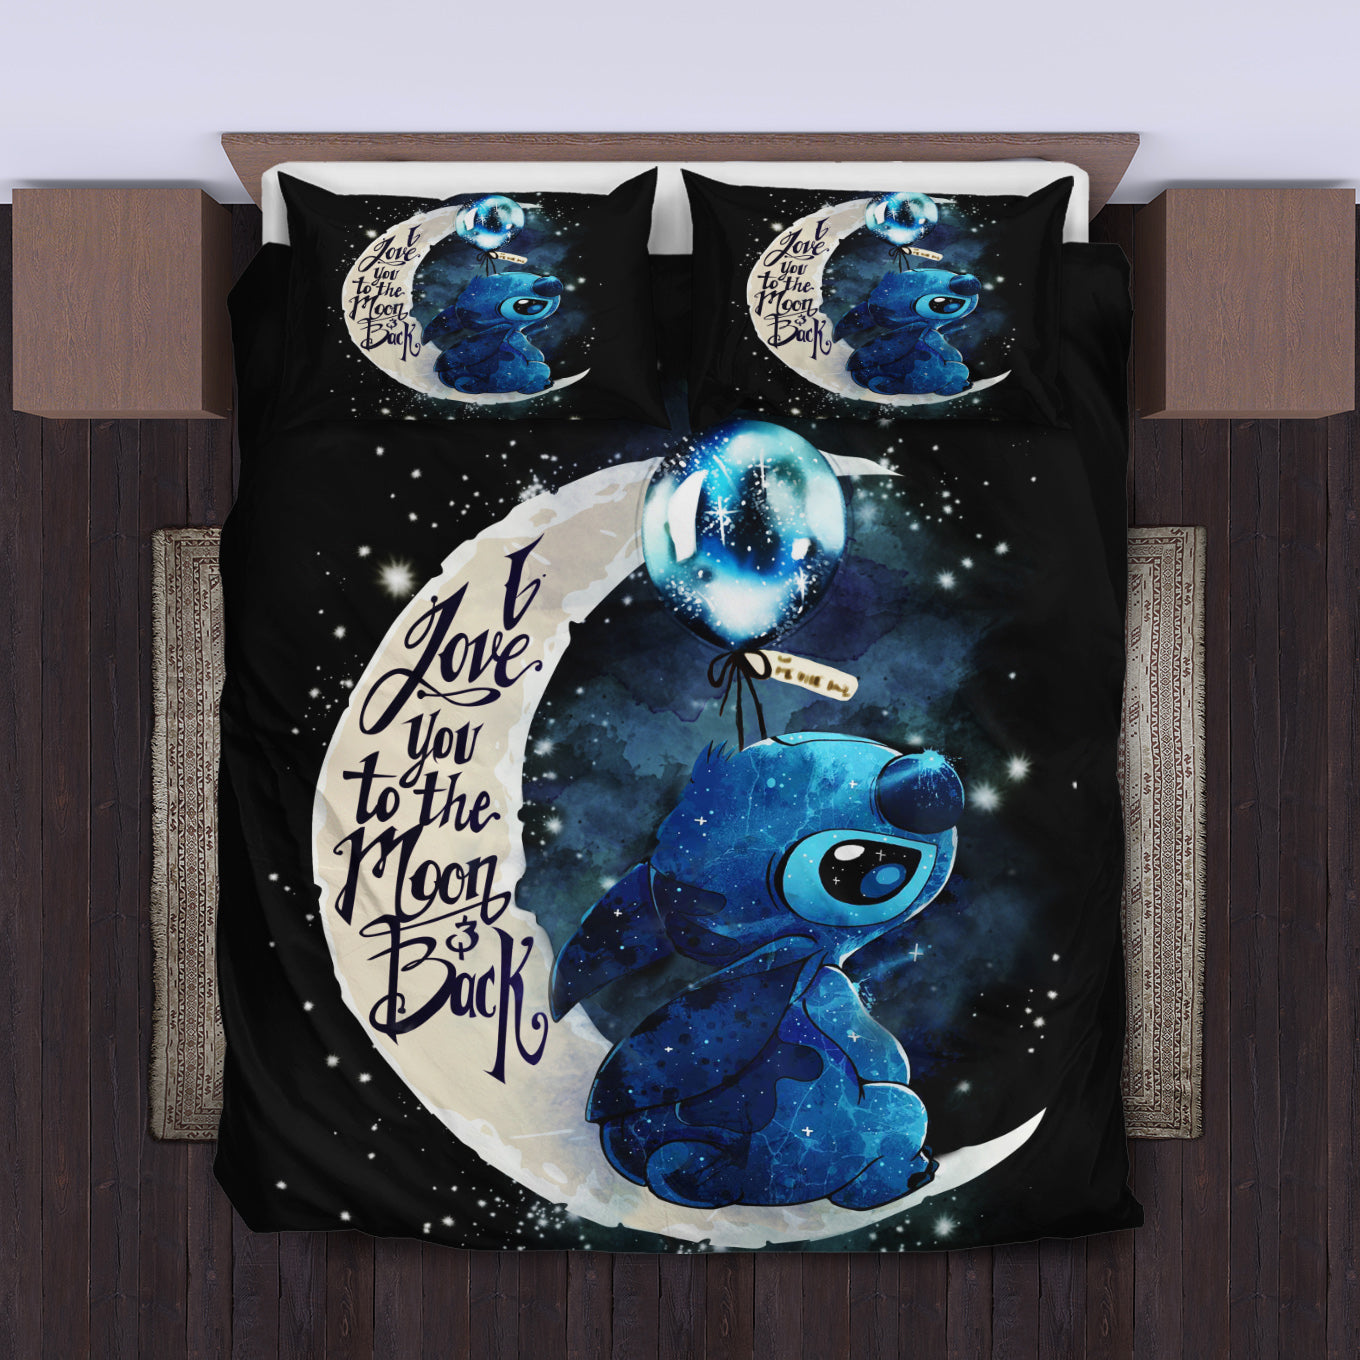 Stitch Love Moon And Back Premium Custom Bedding Set